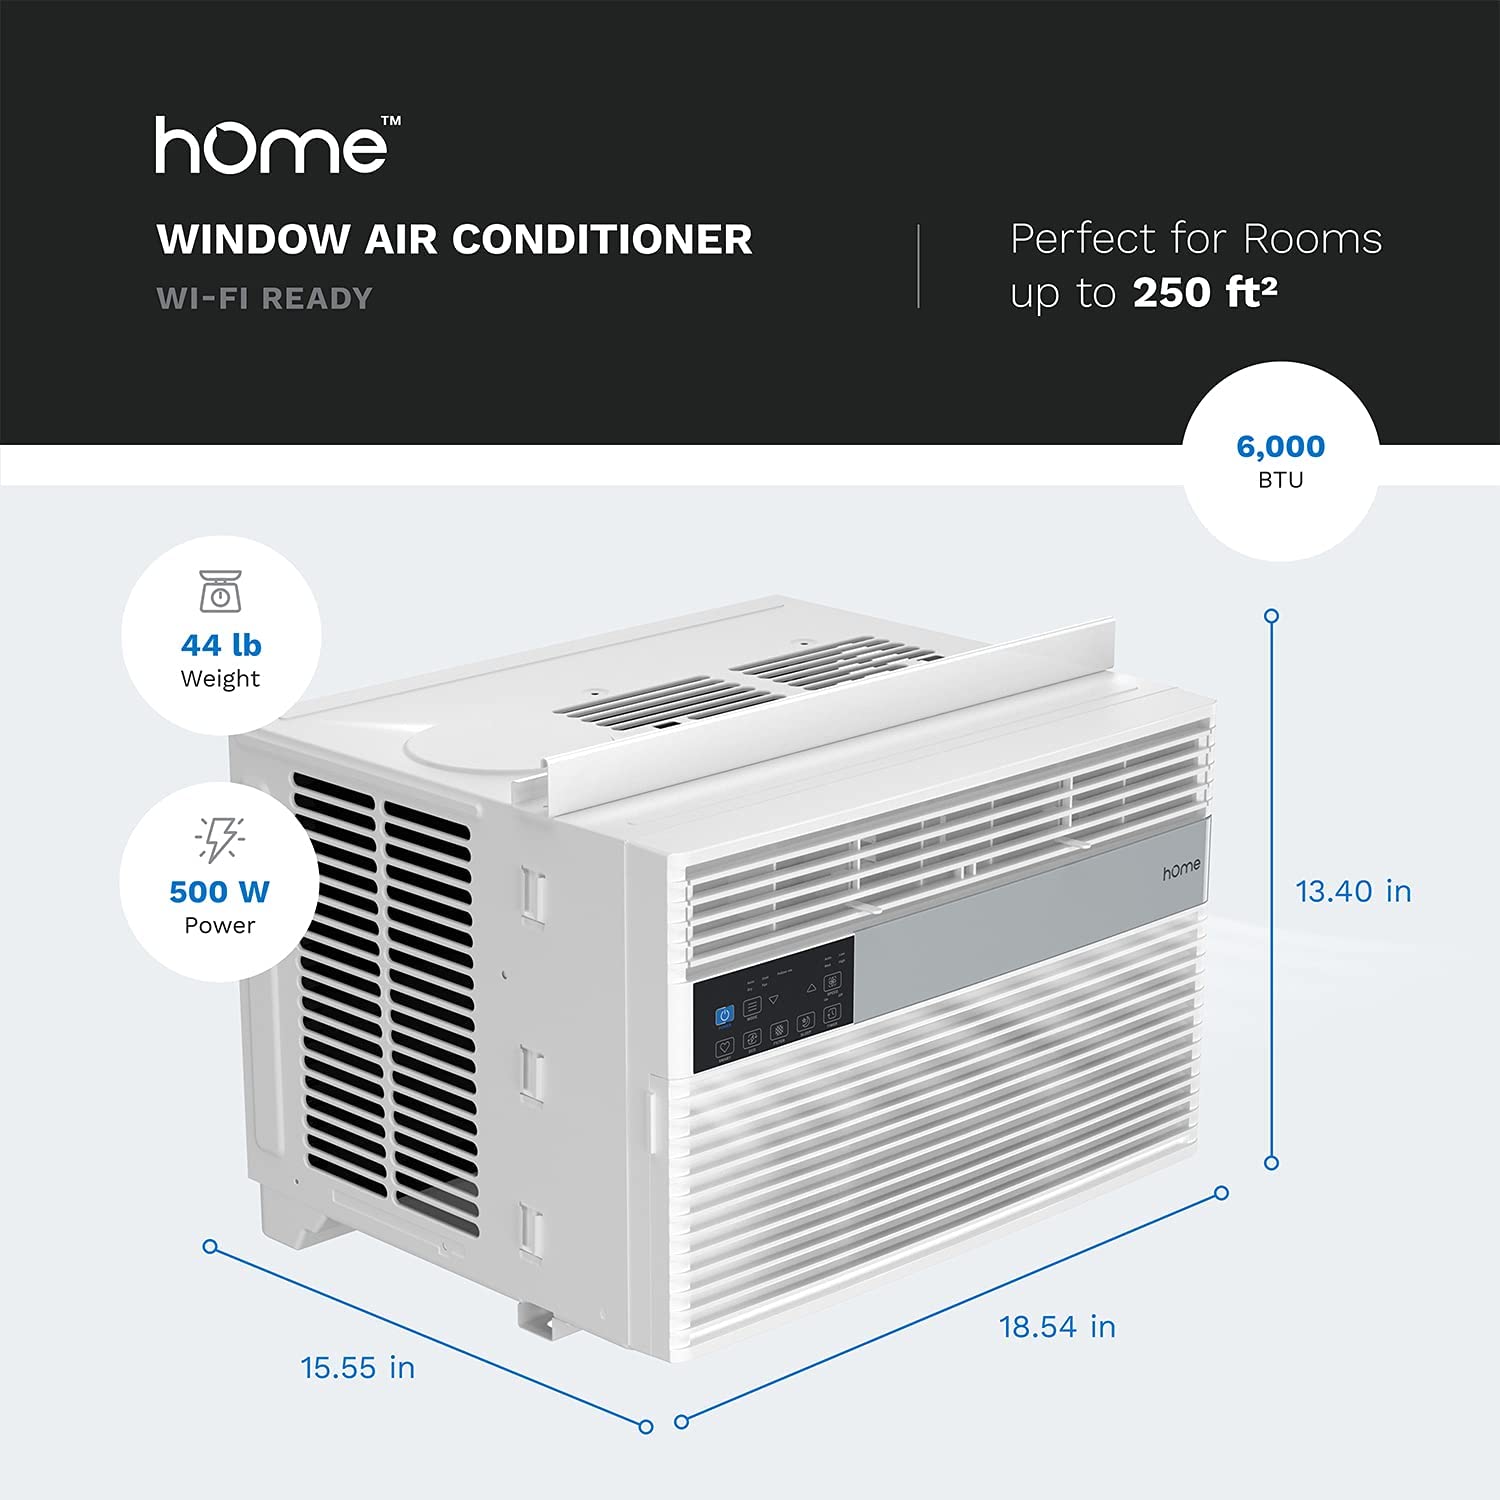 hOmelabs 6,000 BTU Window Air Conditioner Specs 